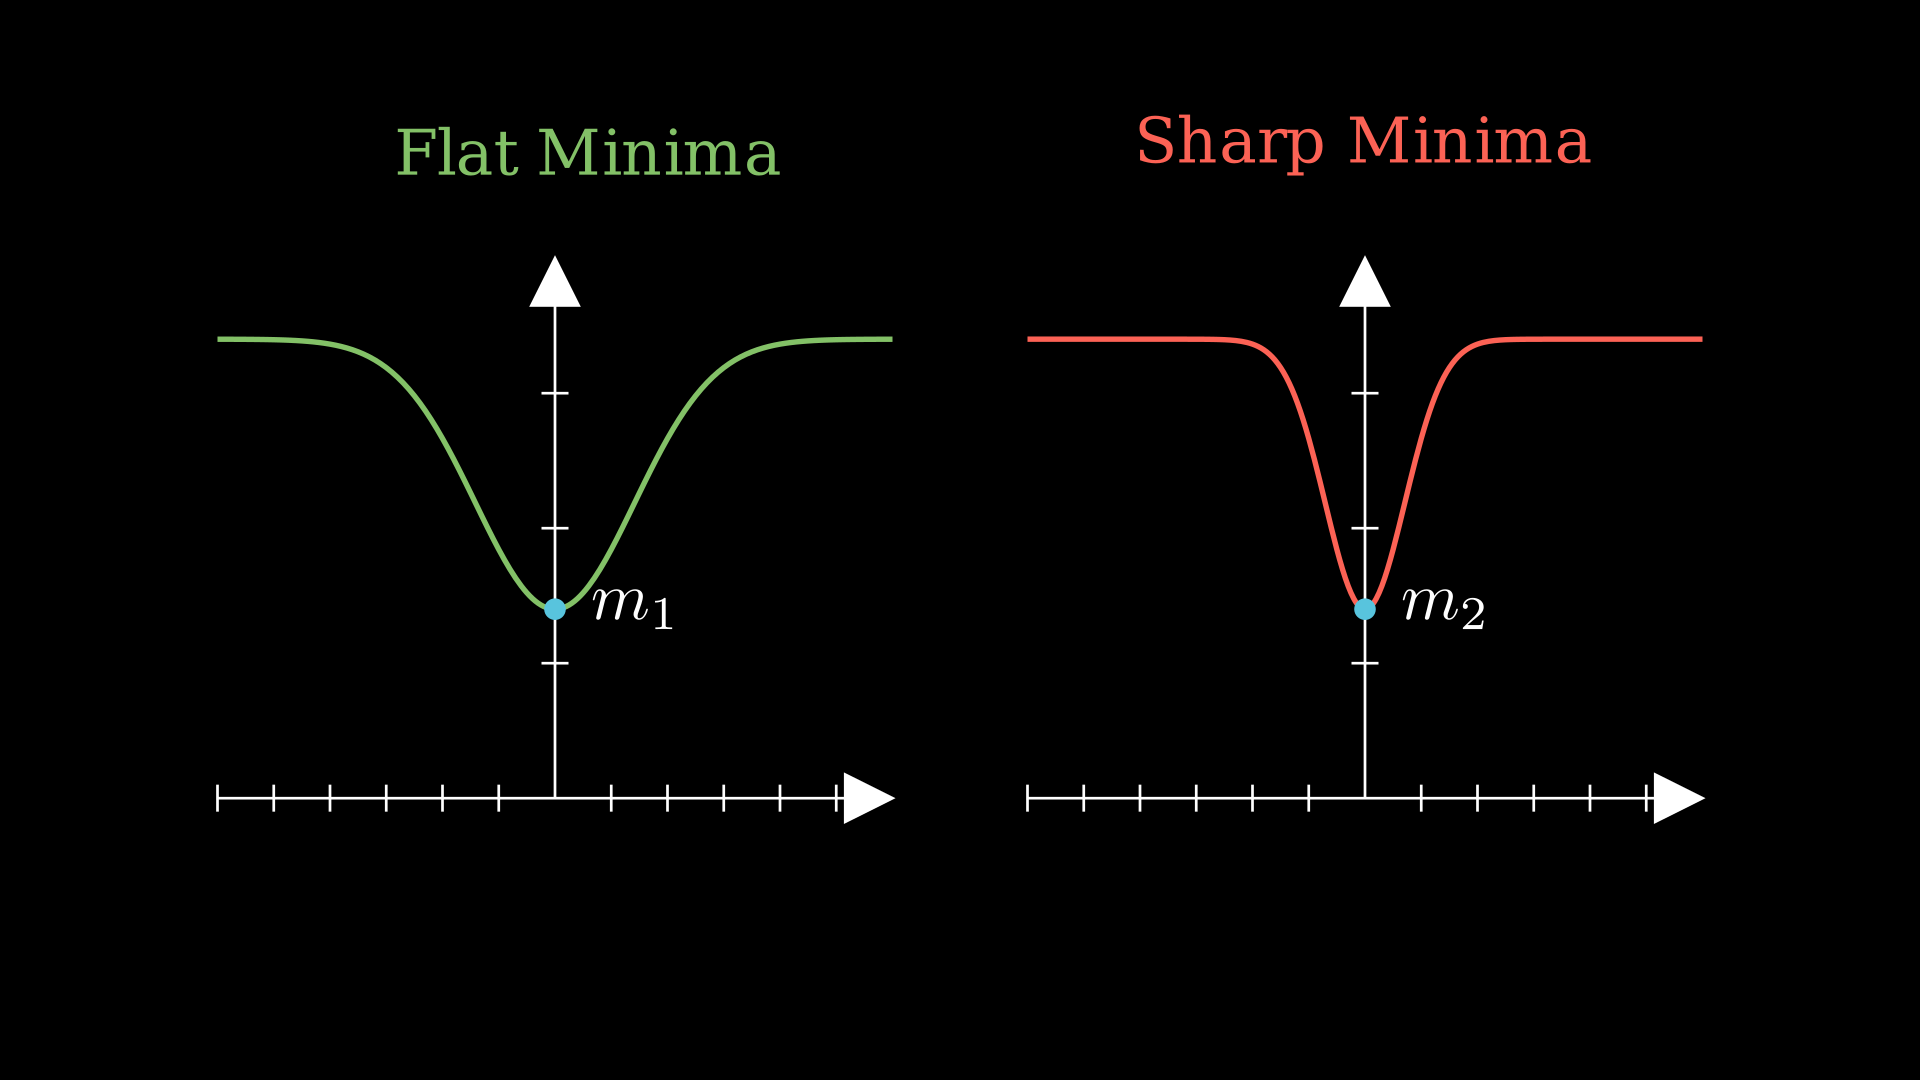 An intuitive informal comparison of flat minima vs sharp minima